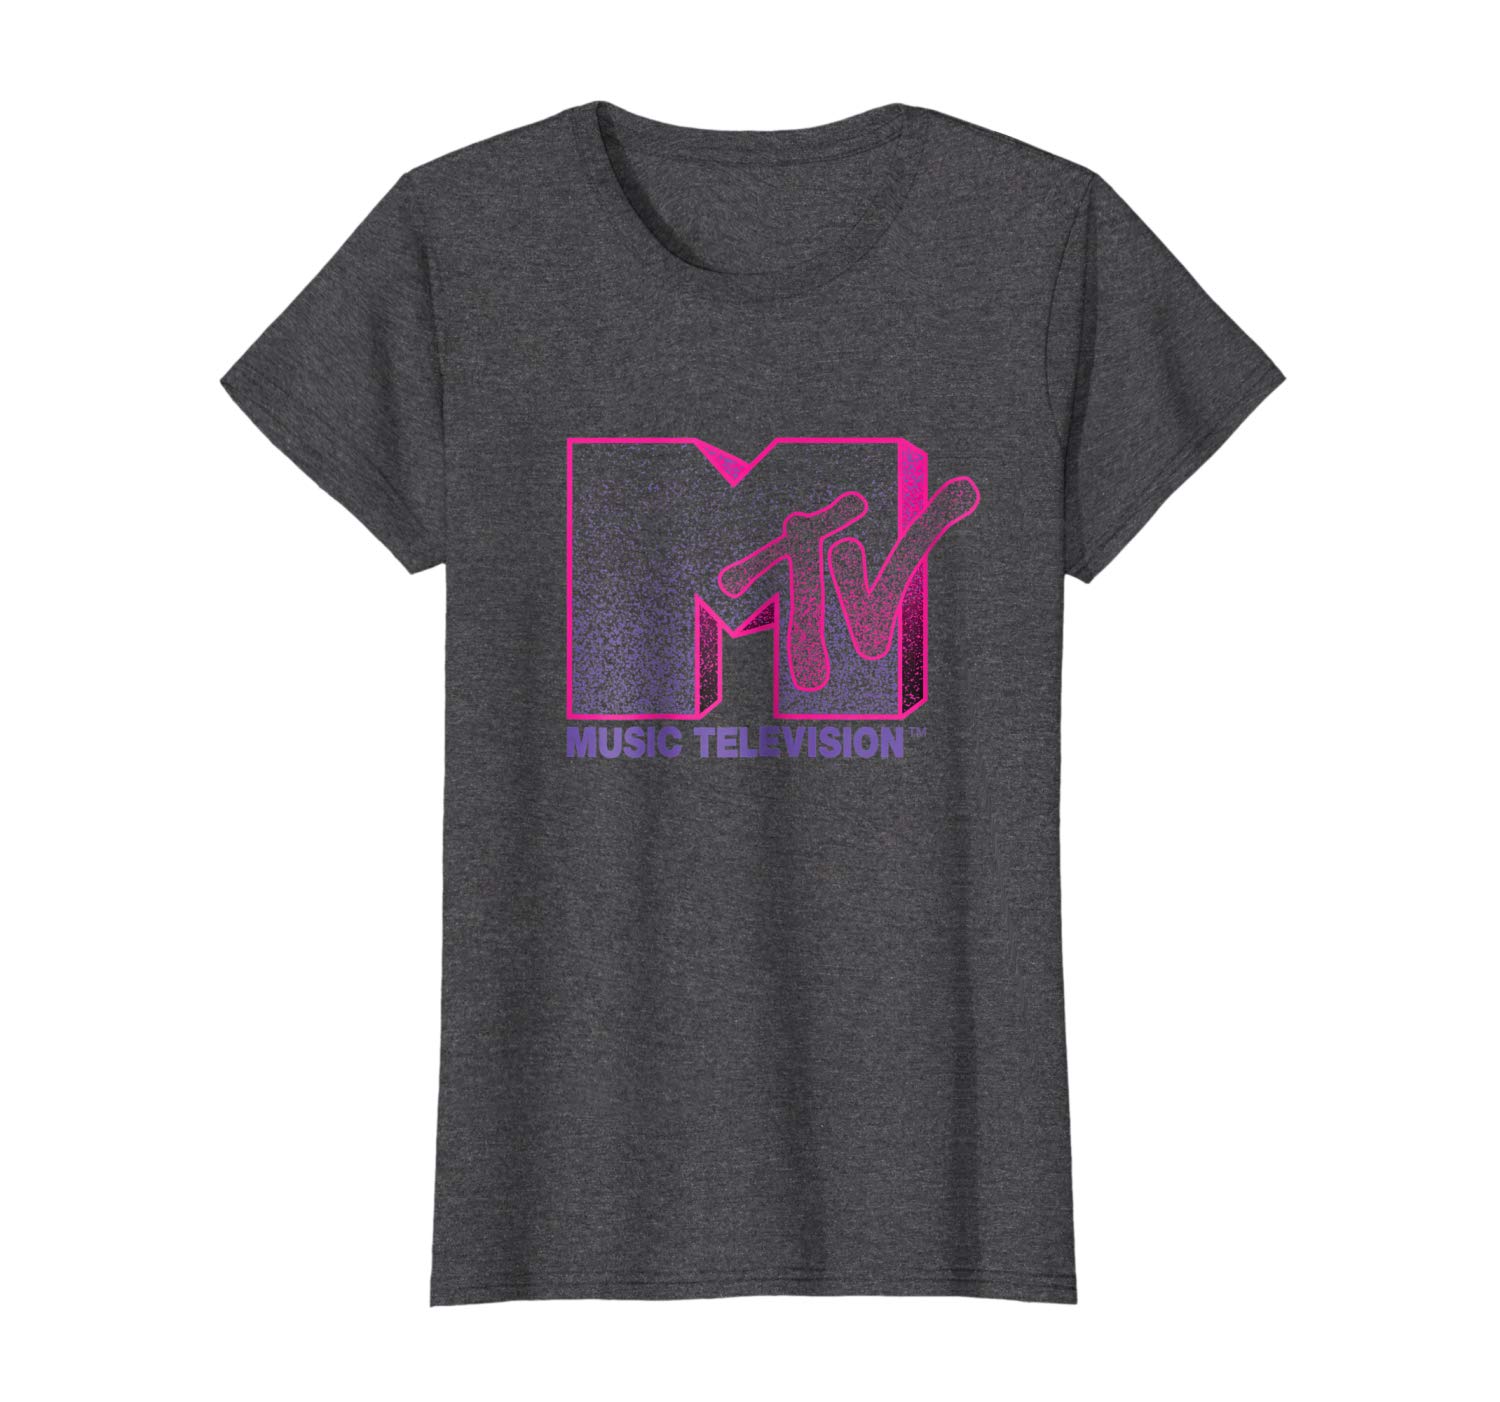 Sparkly Logo - Amazon.com: MTV Sparkly Logo Music Television T- Shirts: Clothing